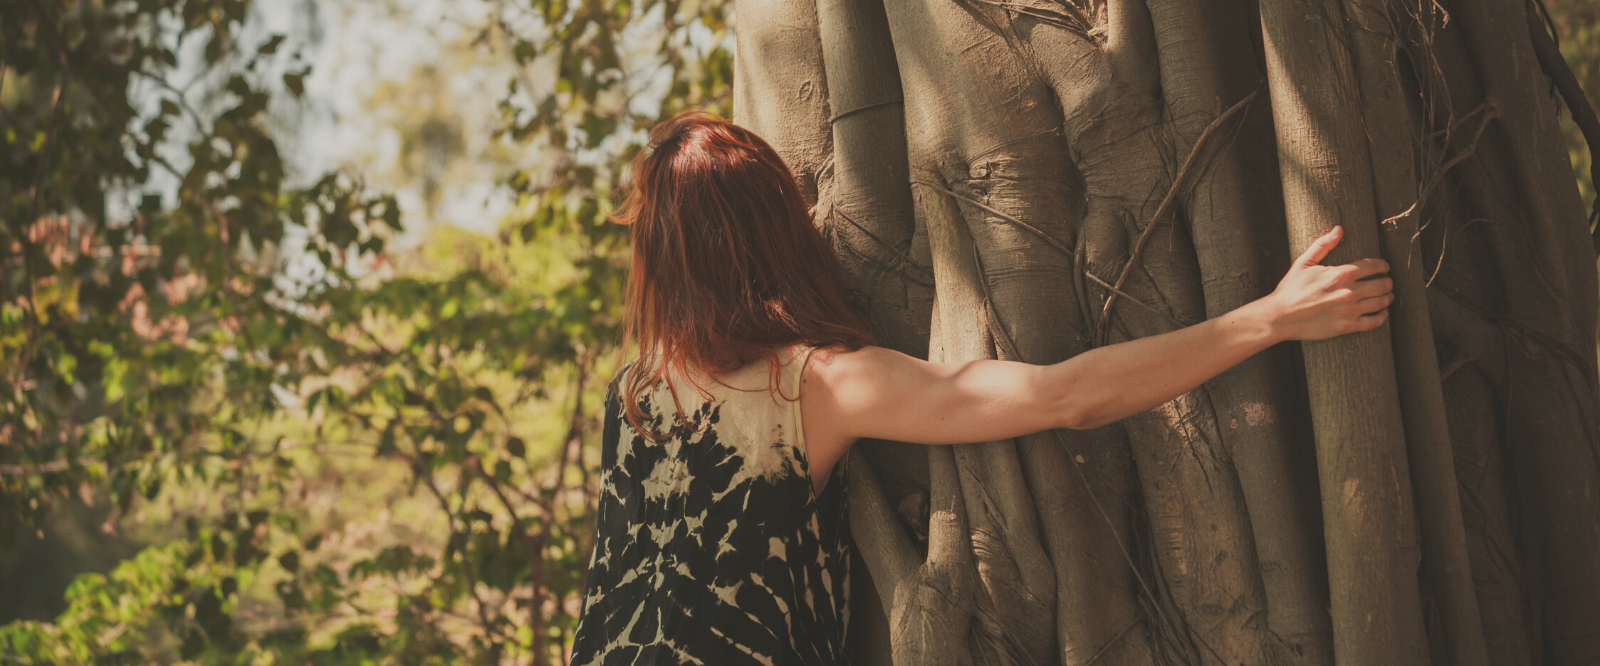 woman hugging tree after using nefertem holistic skin care